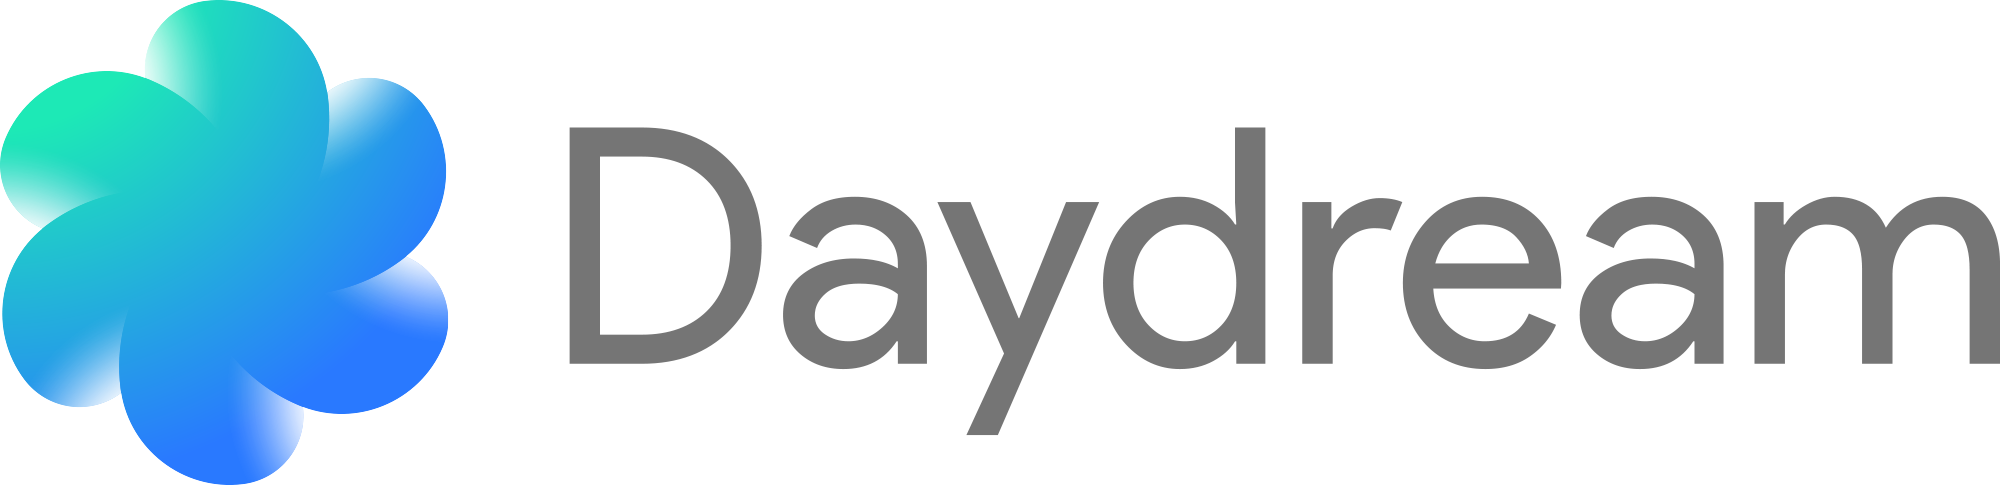 daydream vr game icon logo